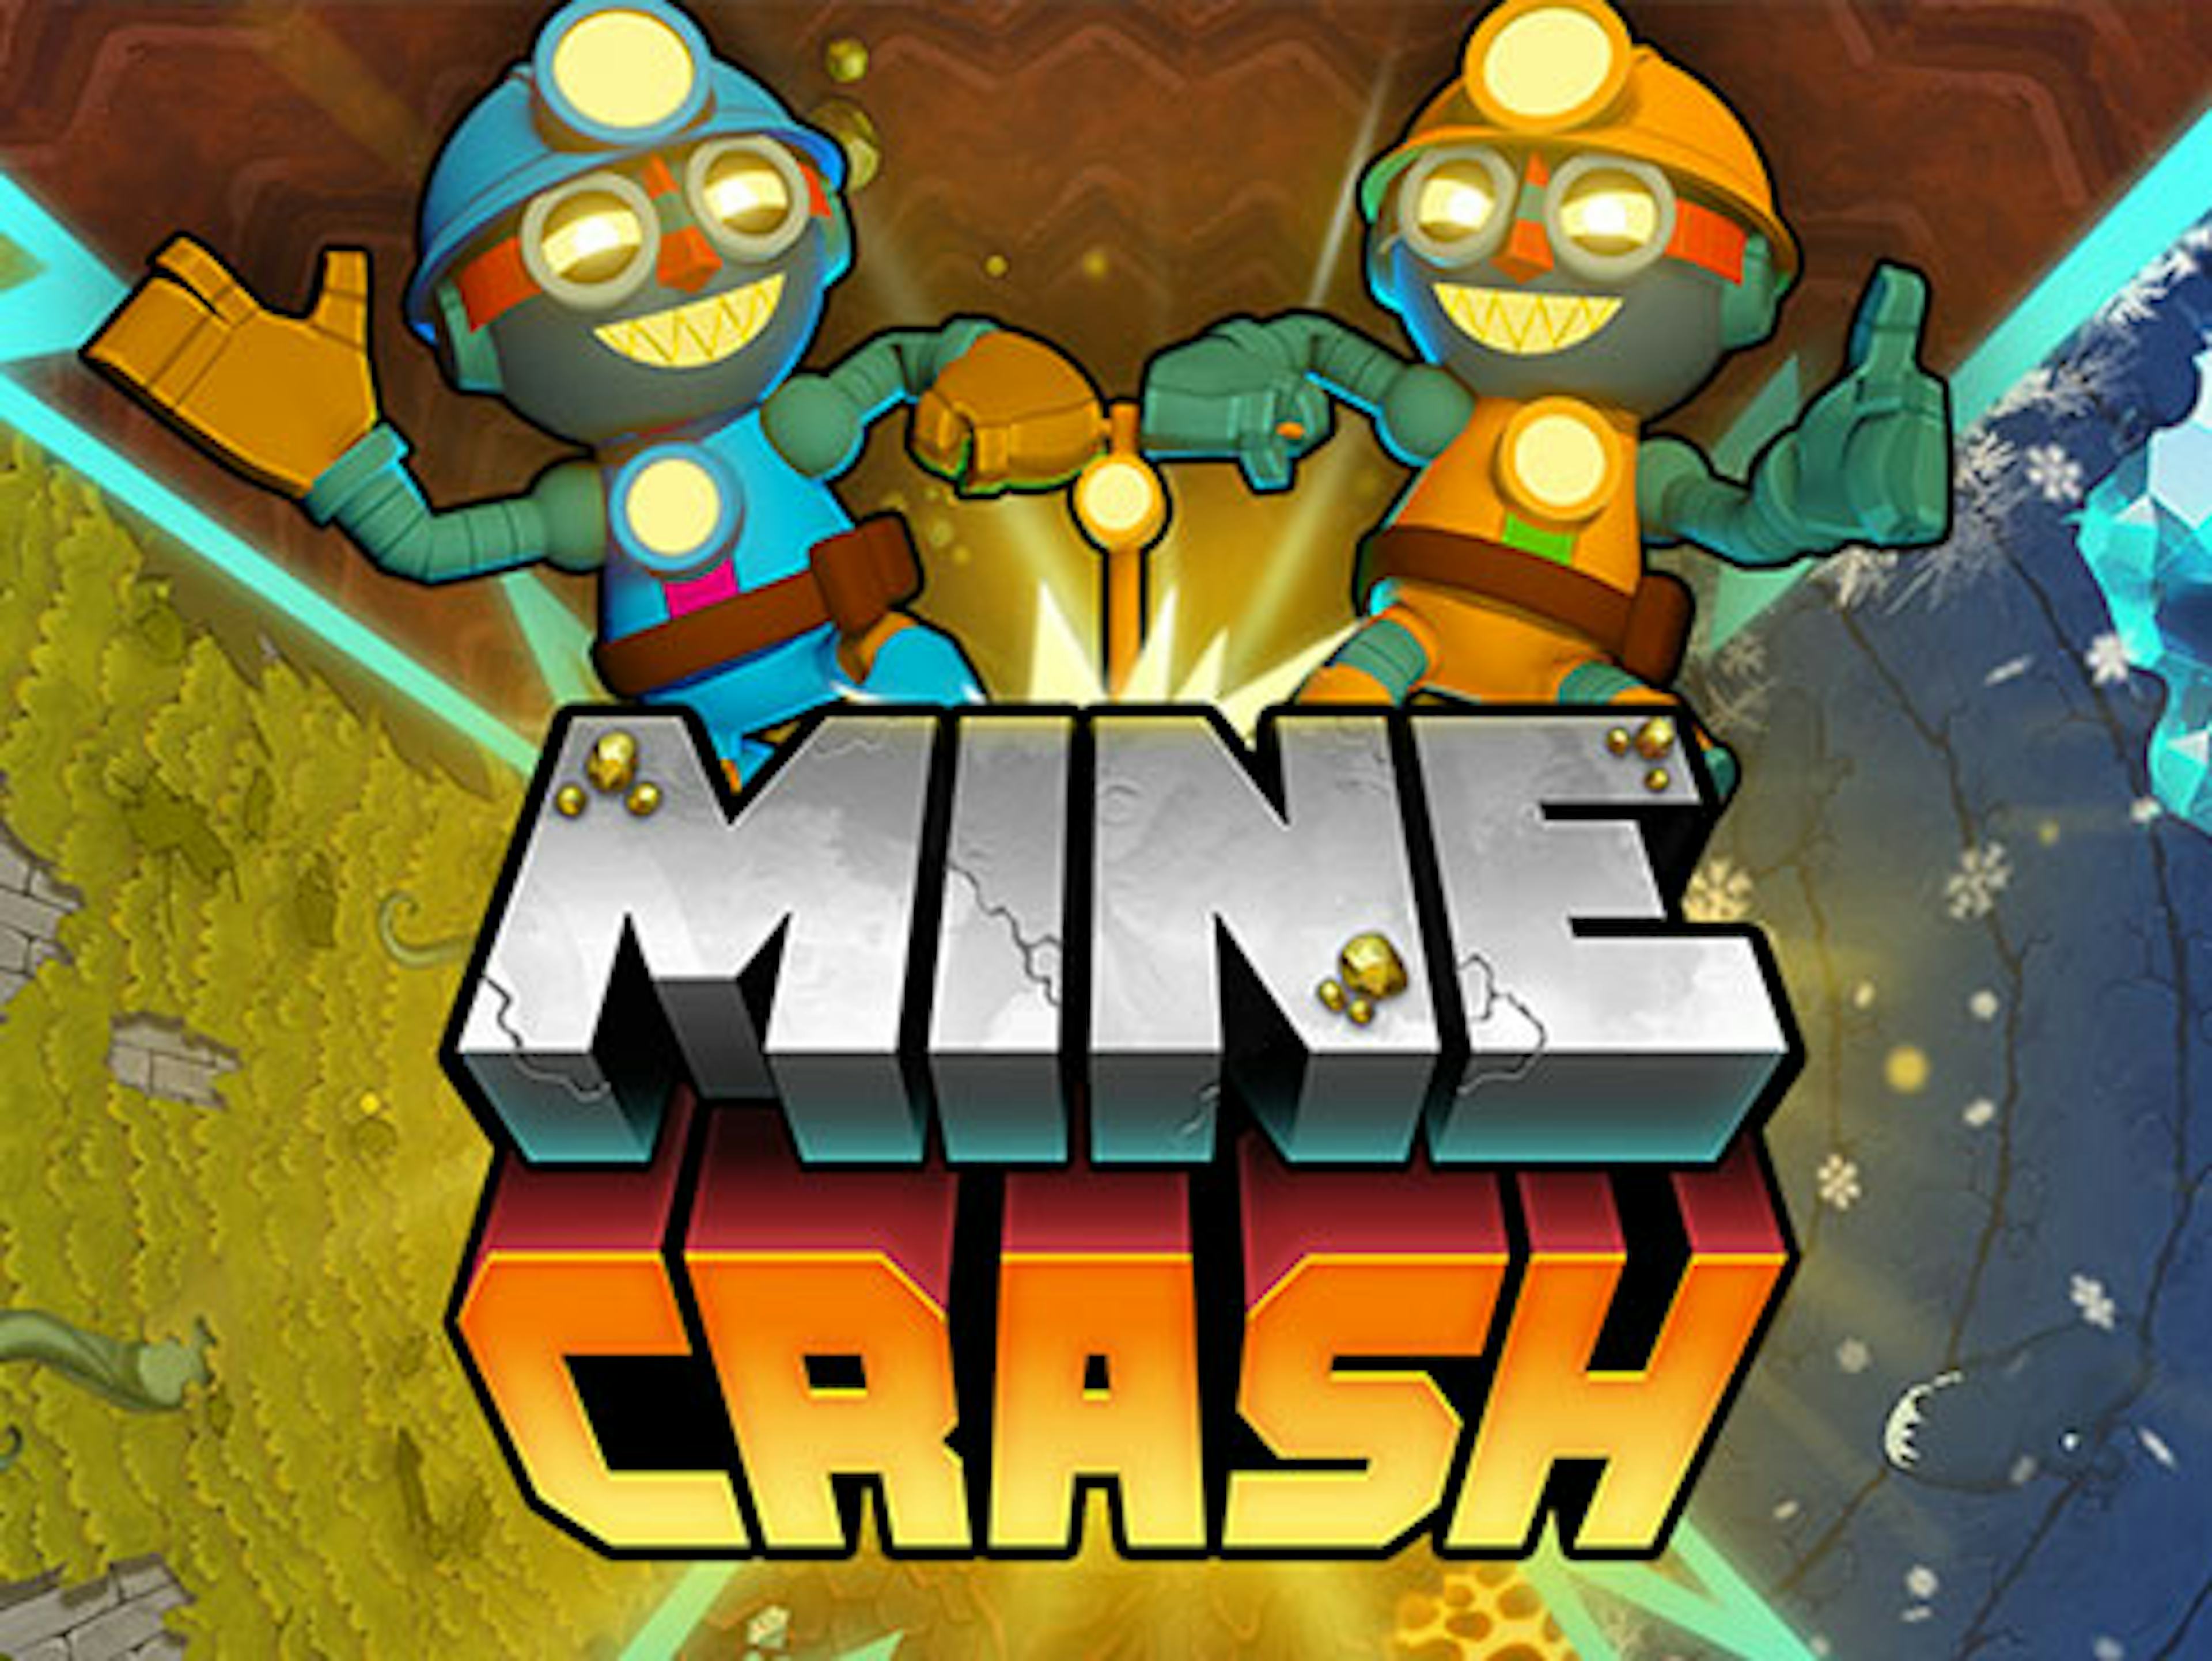 Crash X Game by Turbo Games - Play Crash X Casino Slot Free